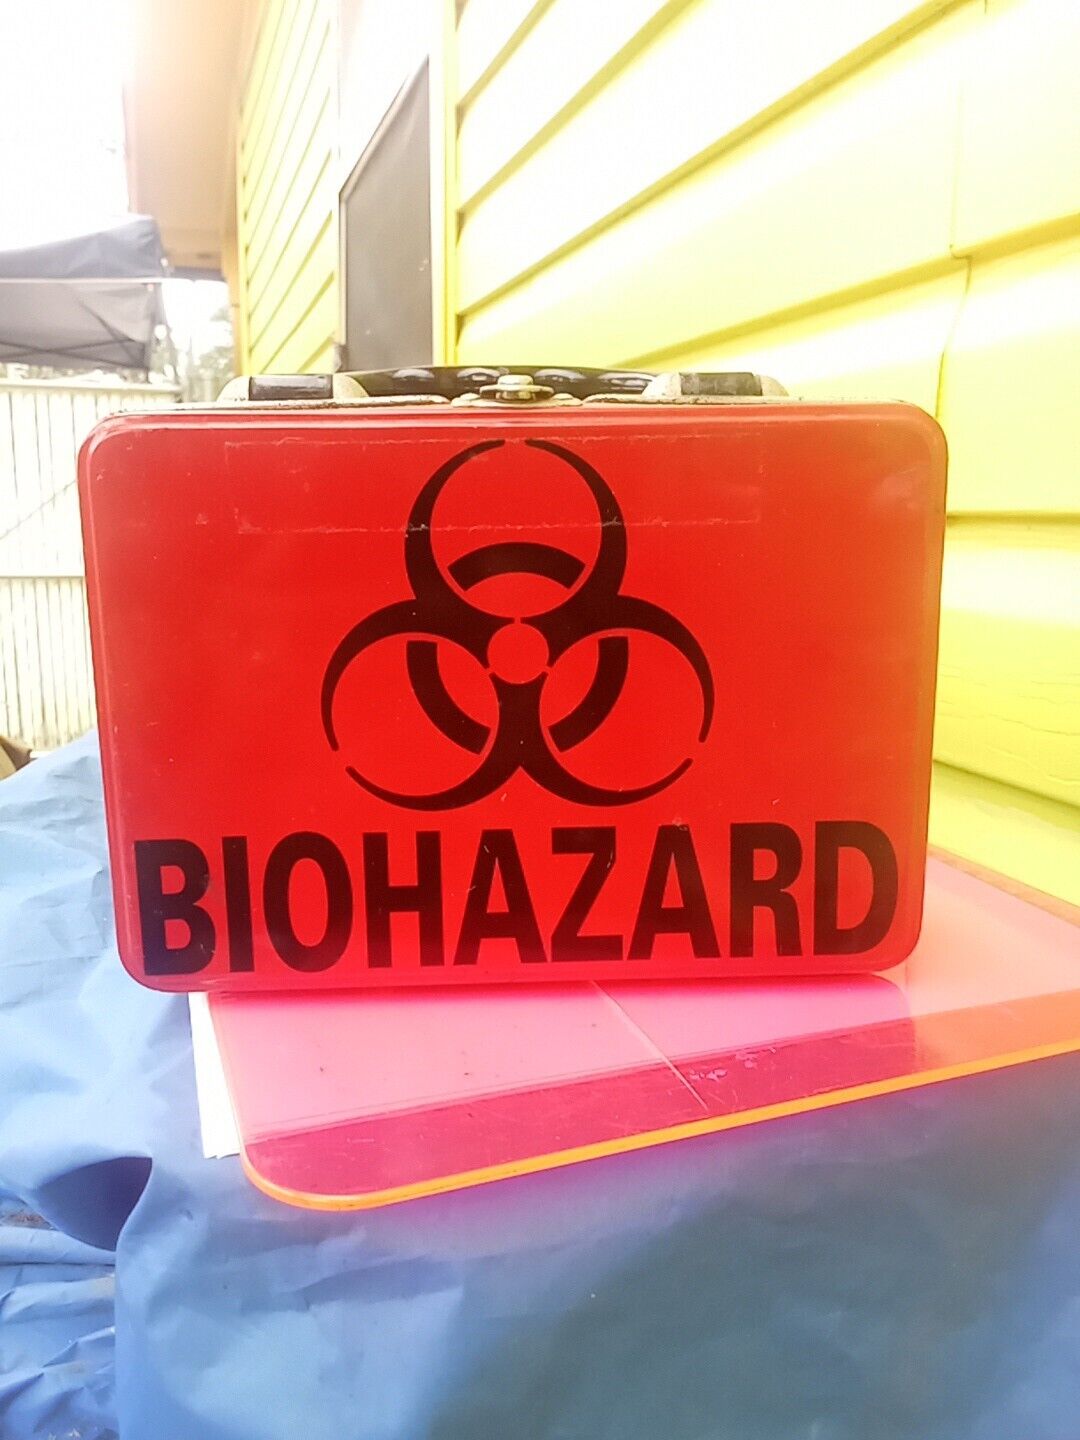 Lunchbox, Biohazard/Radioactive, Small Size, Metal, 1999